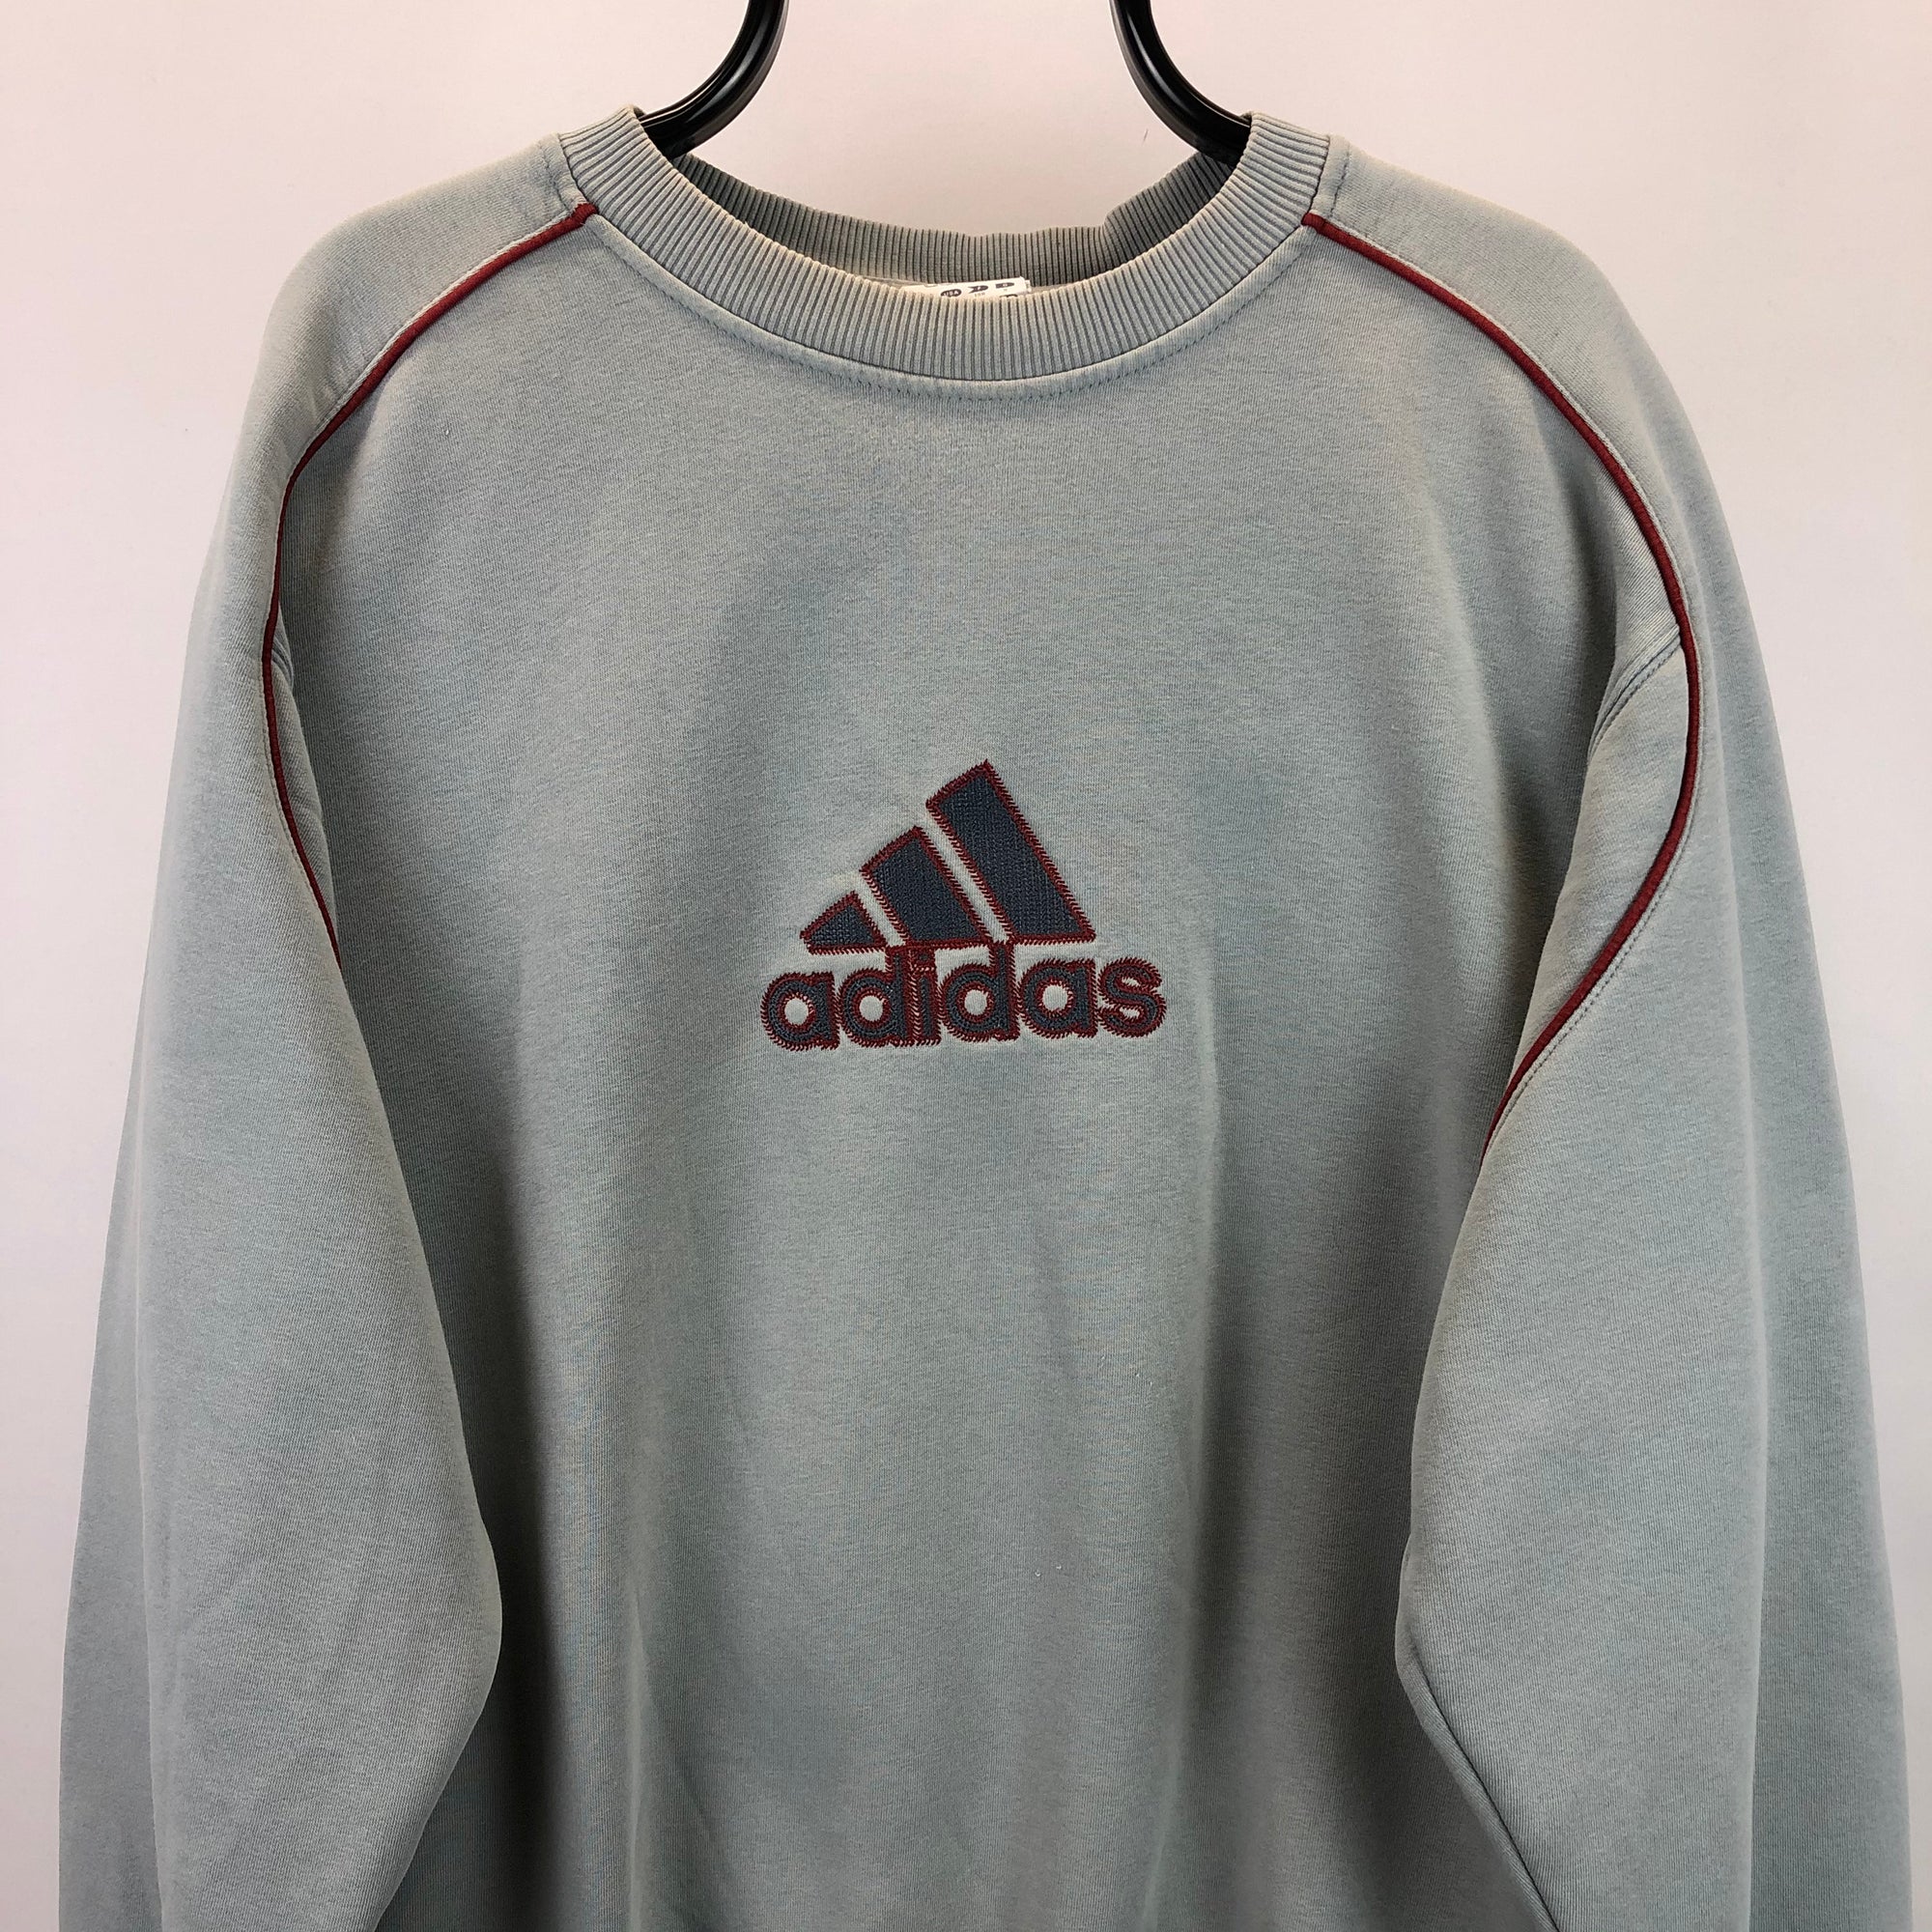 Vintage 90s Adidas Spellout Sweatshirt in Stone/Red - Men's XL/Women's XXL